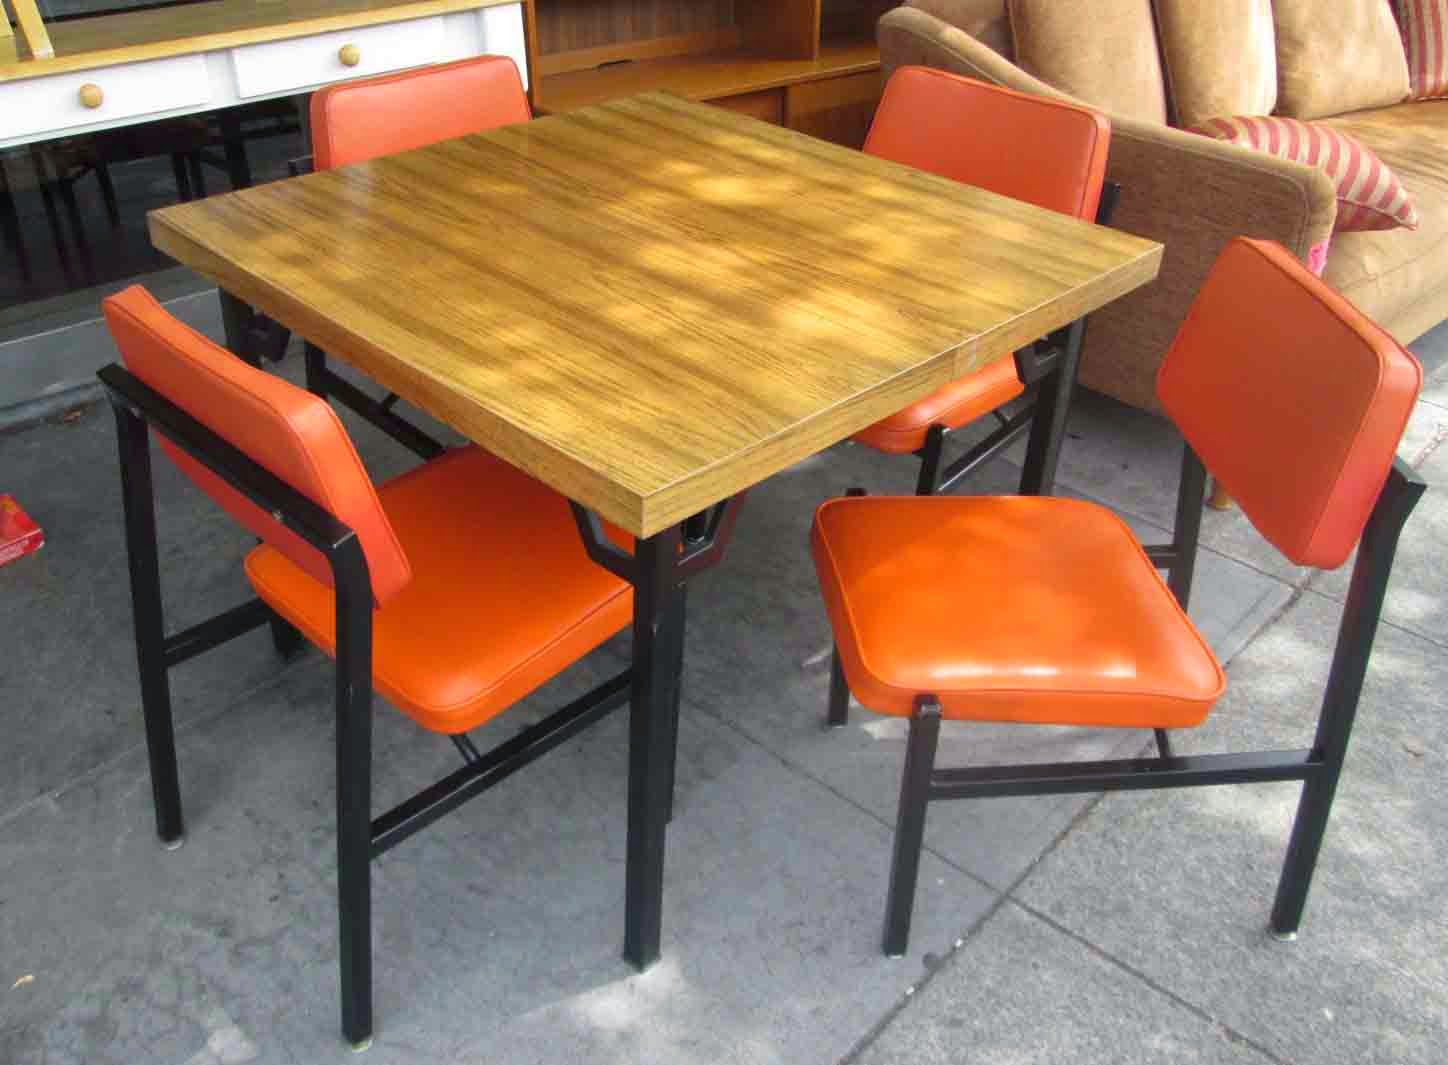 UHURU FURNITURE & COLLECTIBLES: SOLD Retro Orange Dining Set: Table, 2